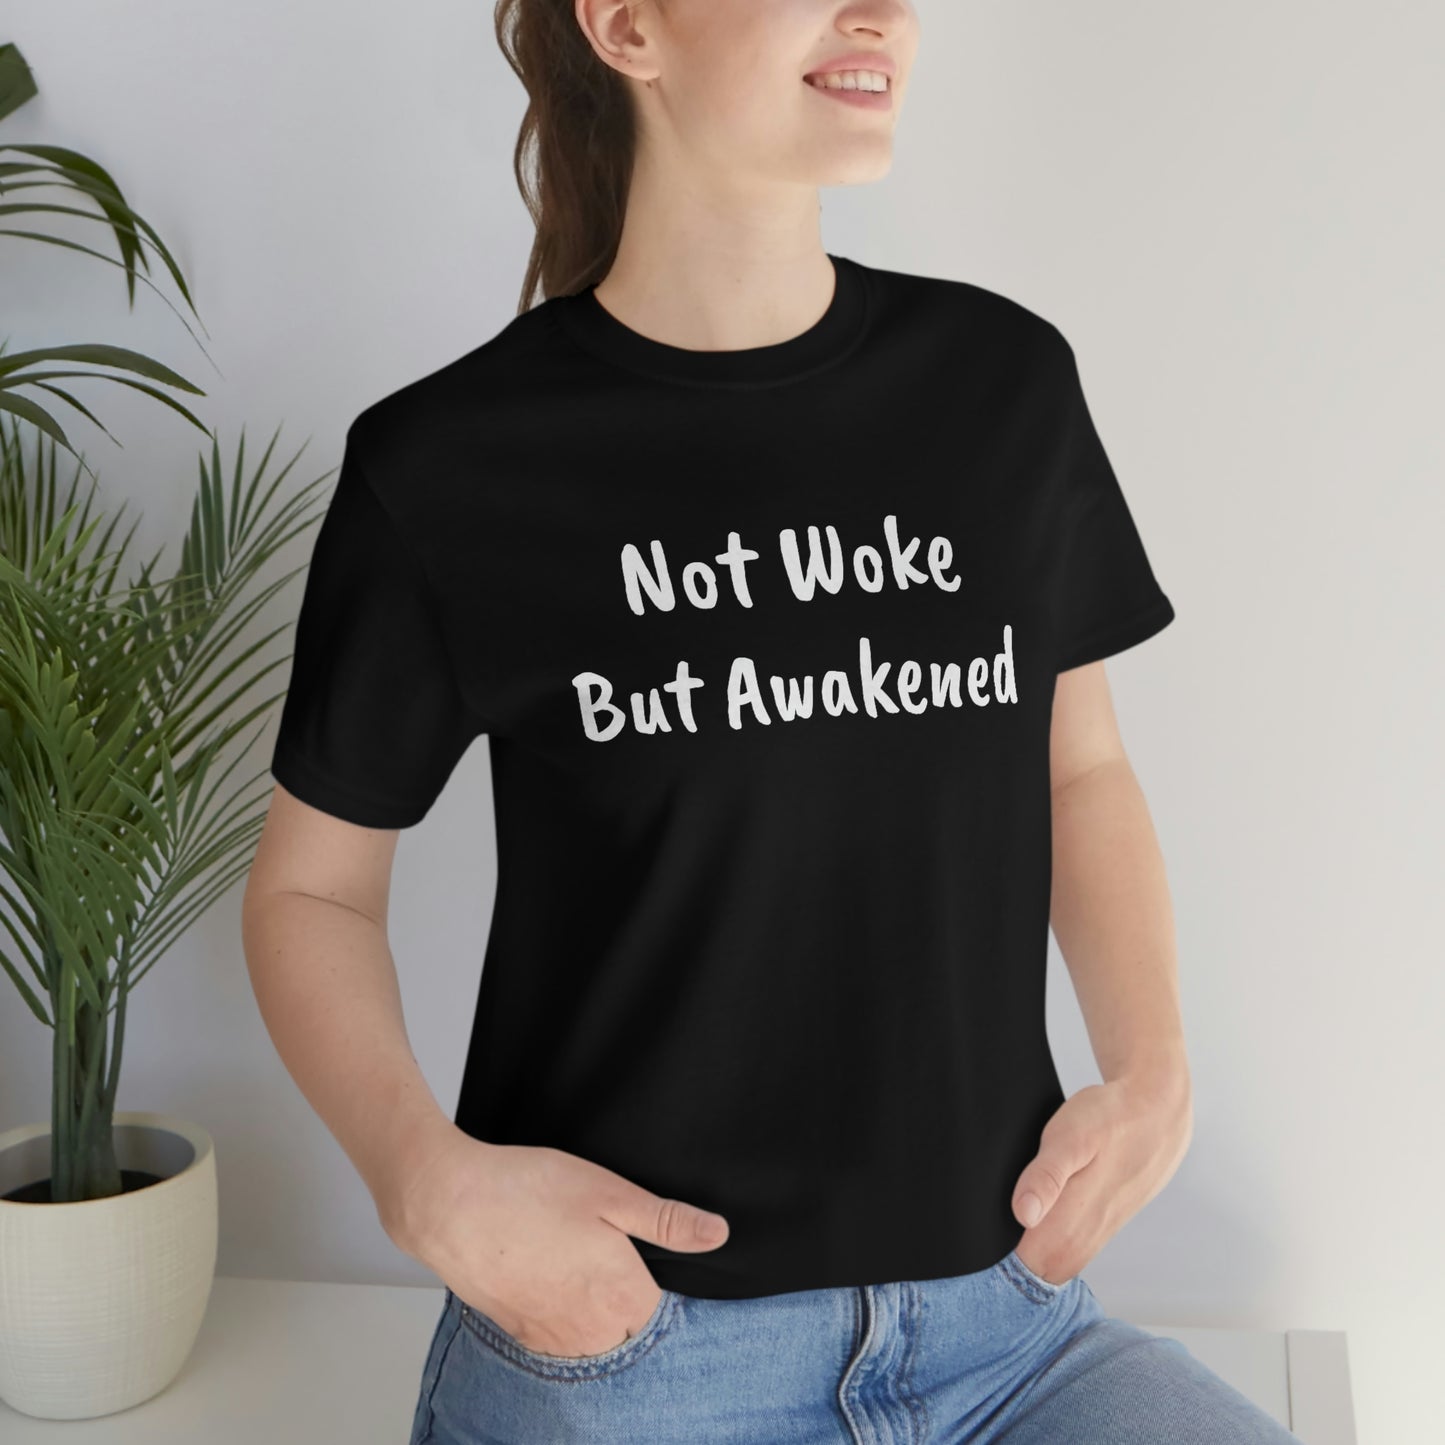 Not Woke But Awakened (NWBA) T-Shirt